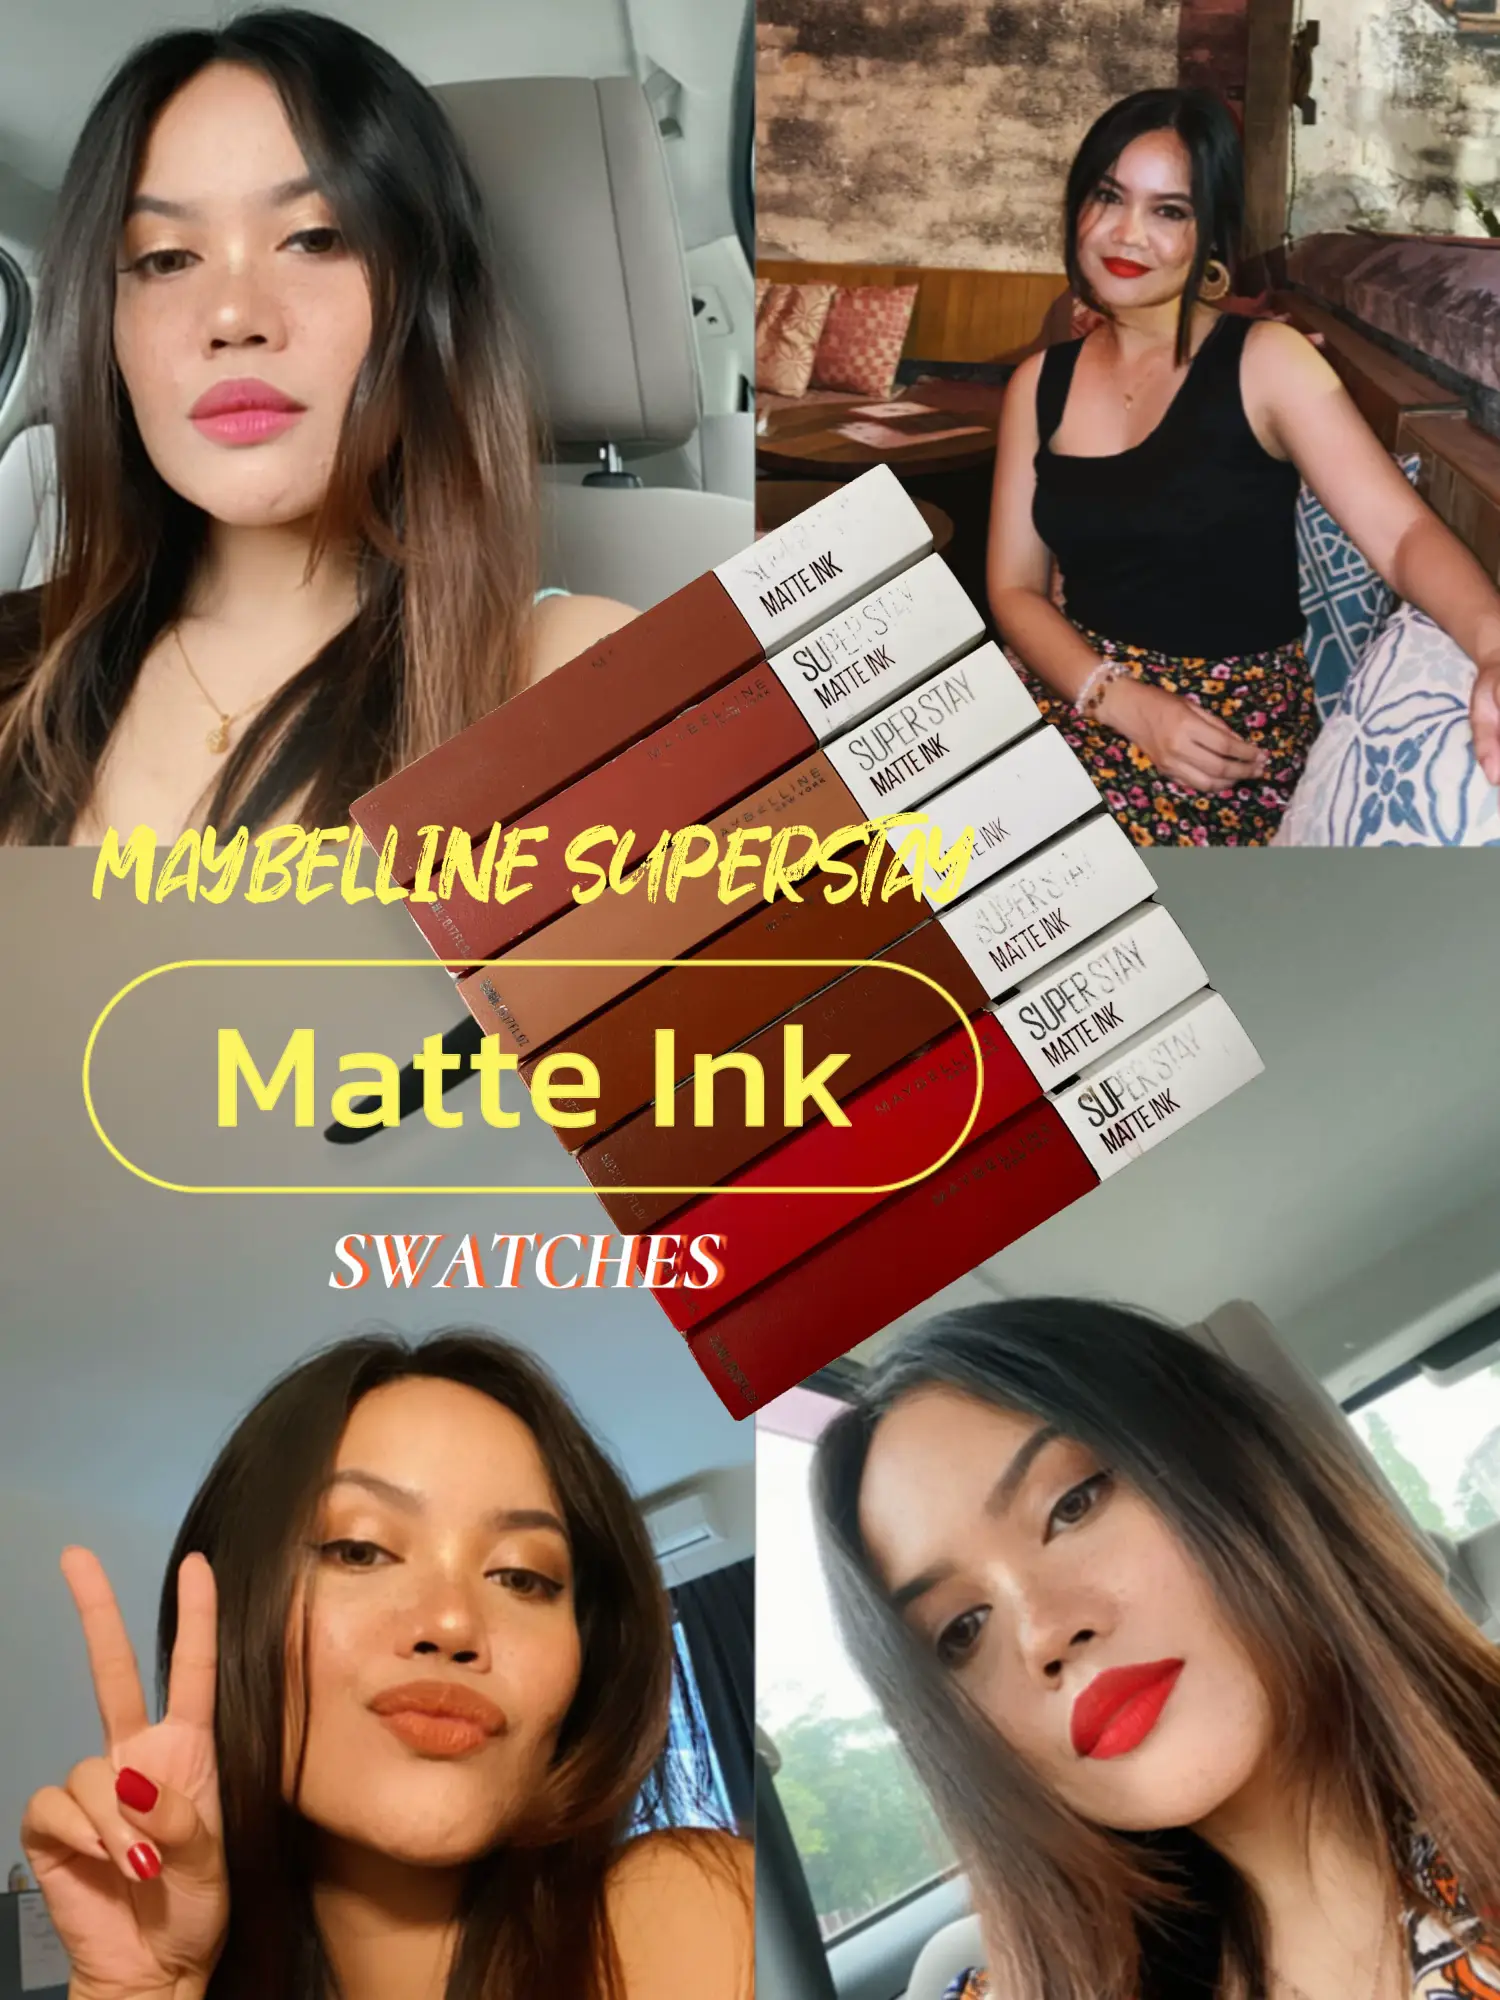 Maybelline Superstay Matte Ink Liquid Lipstick 70 ian 5ml (0.17fl oz)